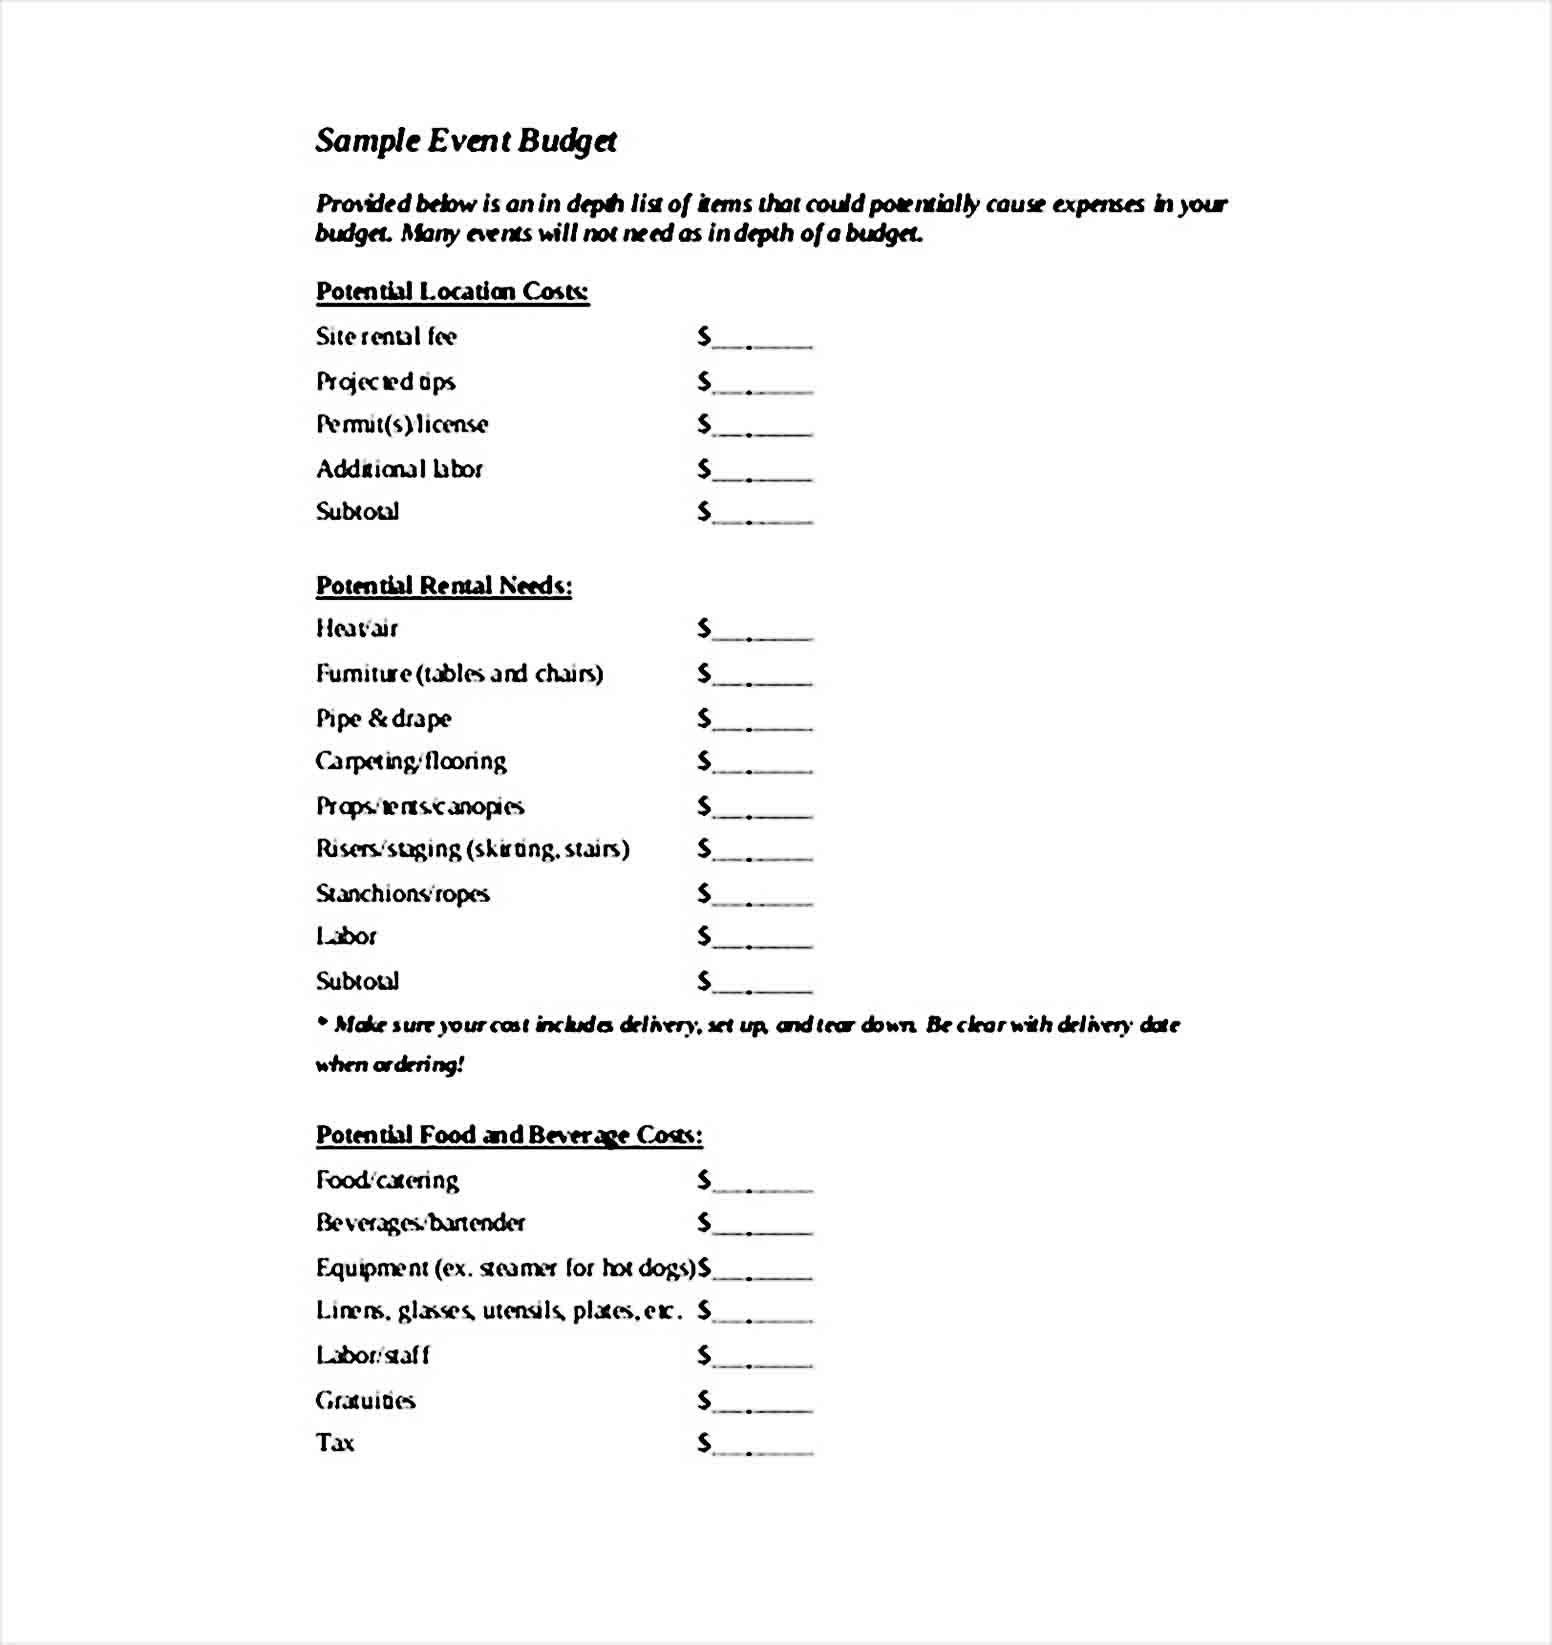 Sample Event Budget Template PDF